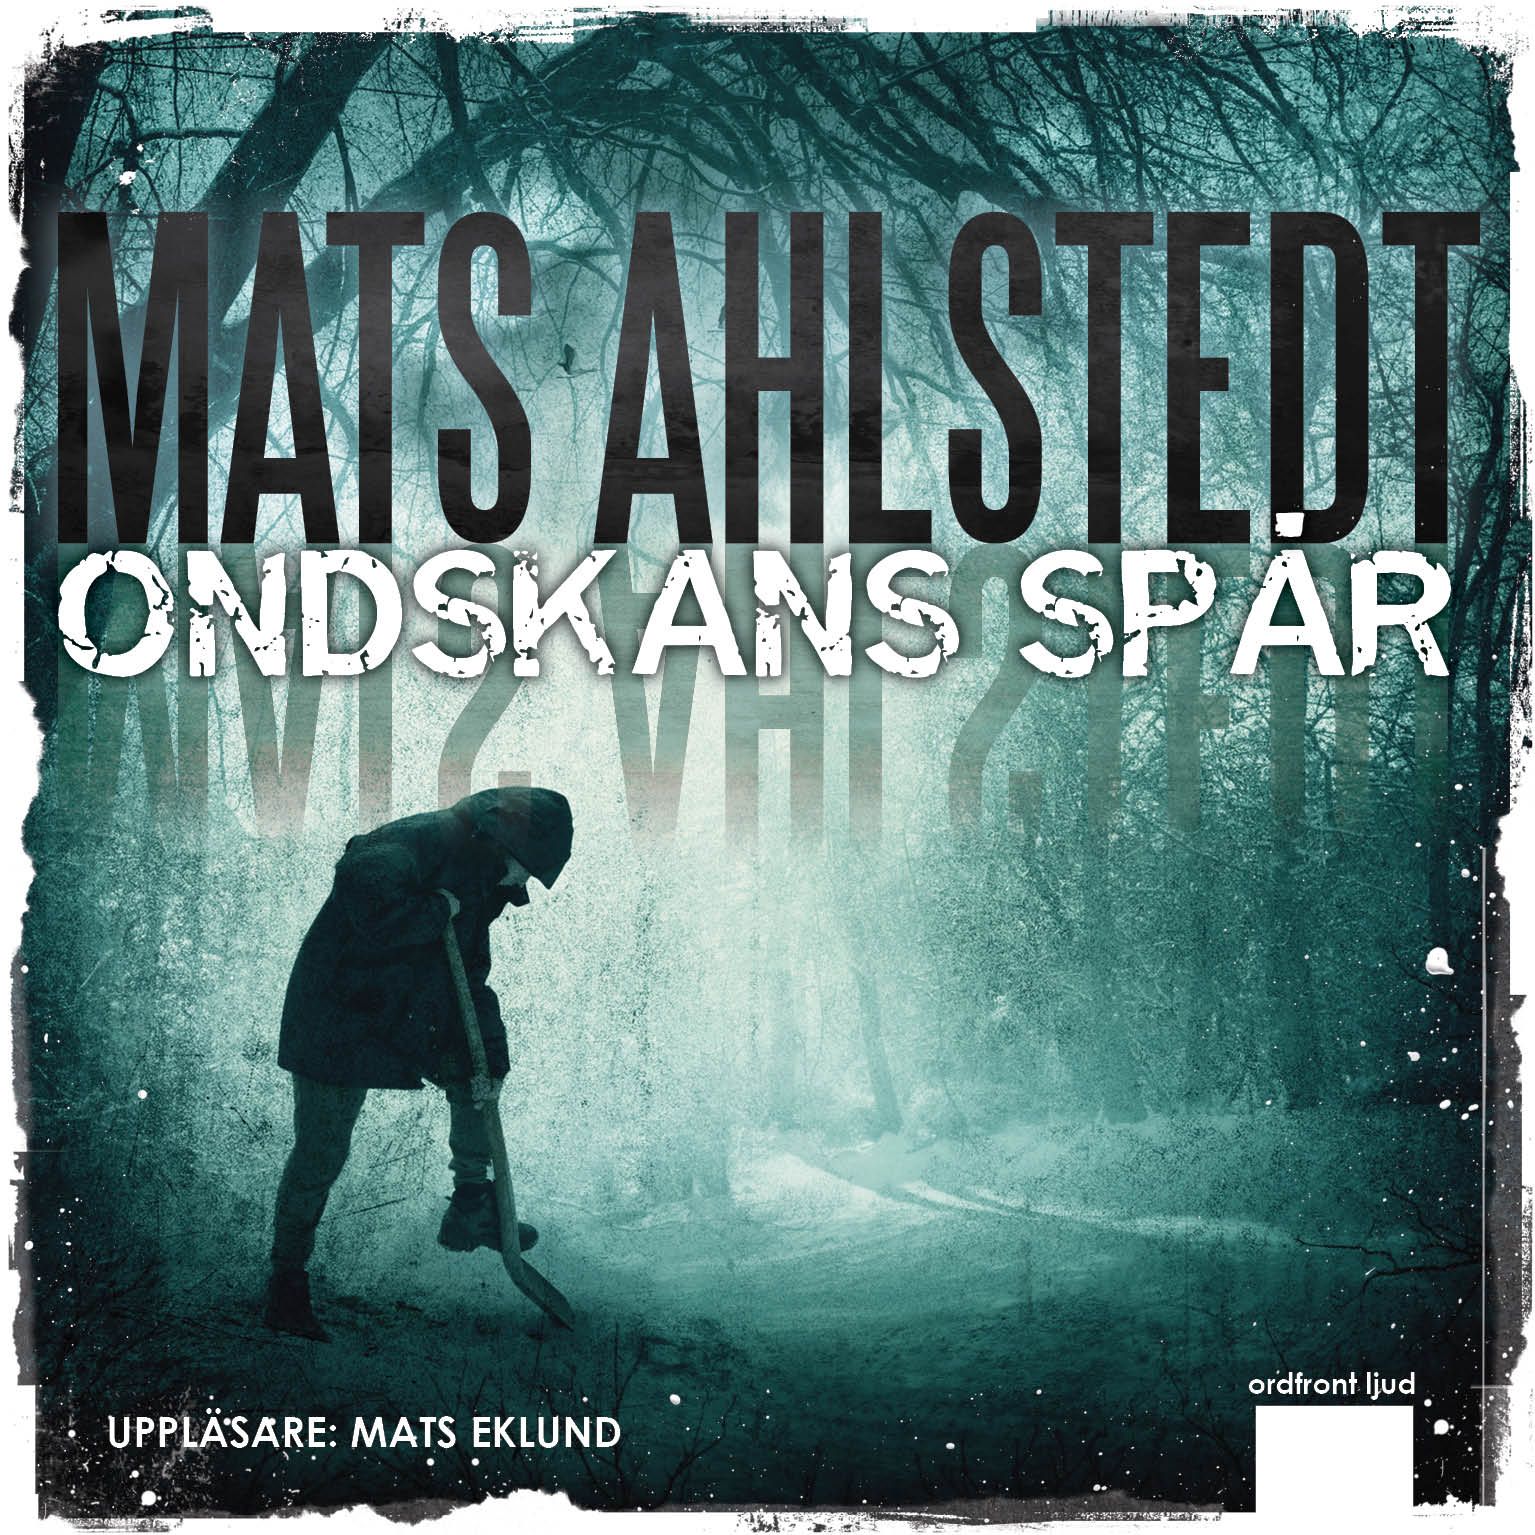 Ondskans spår, audiobook by Mats Ahlstedt